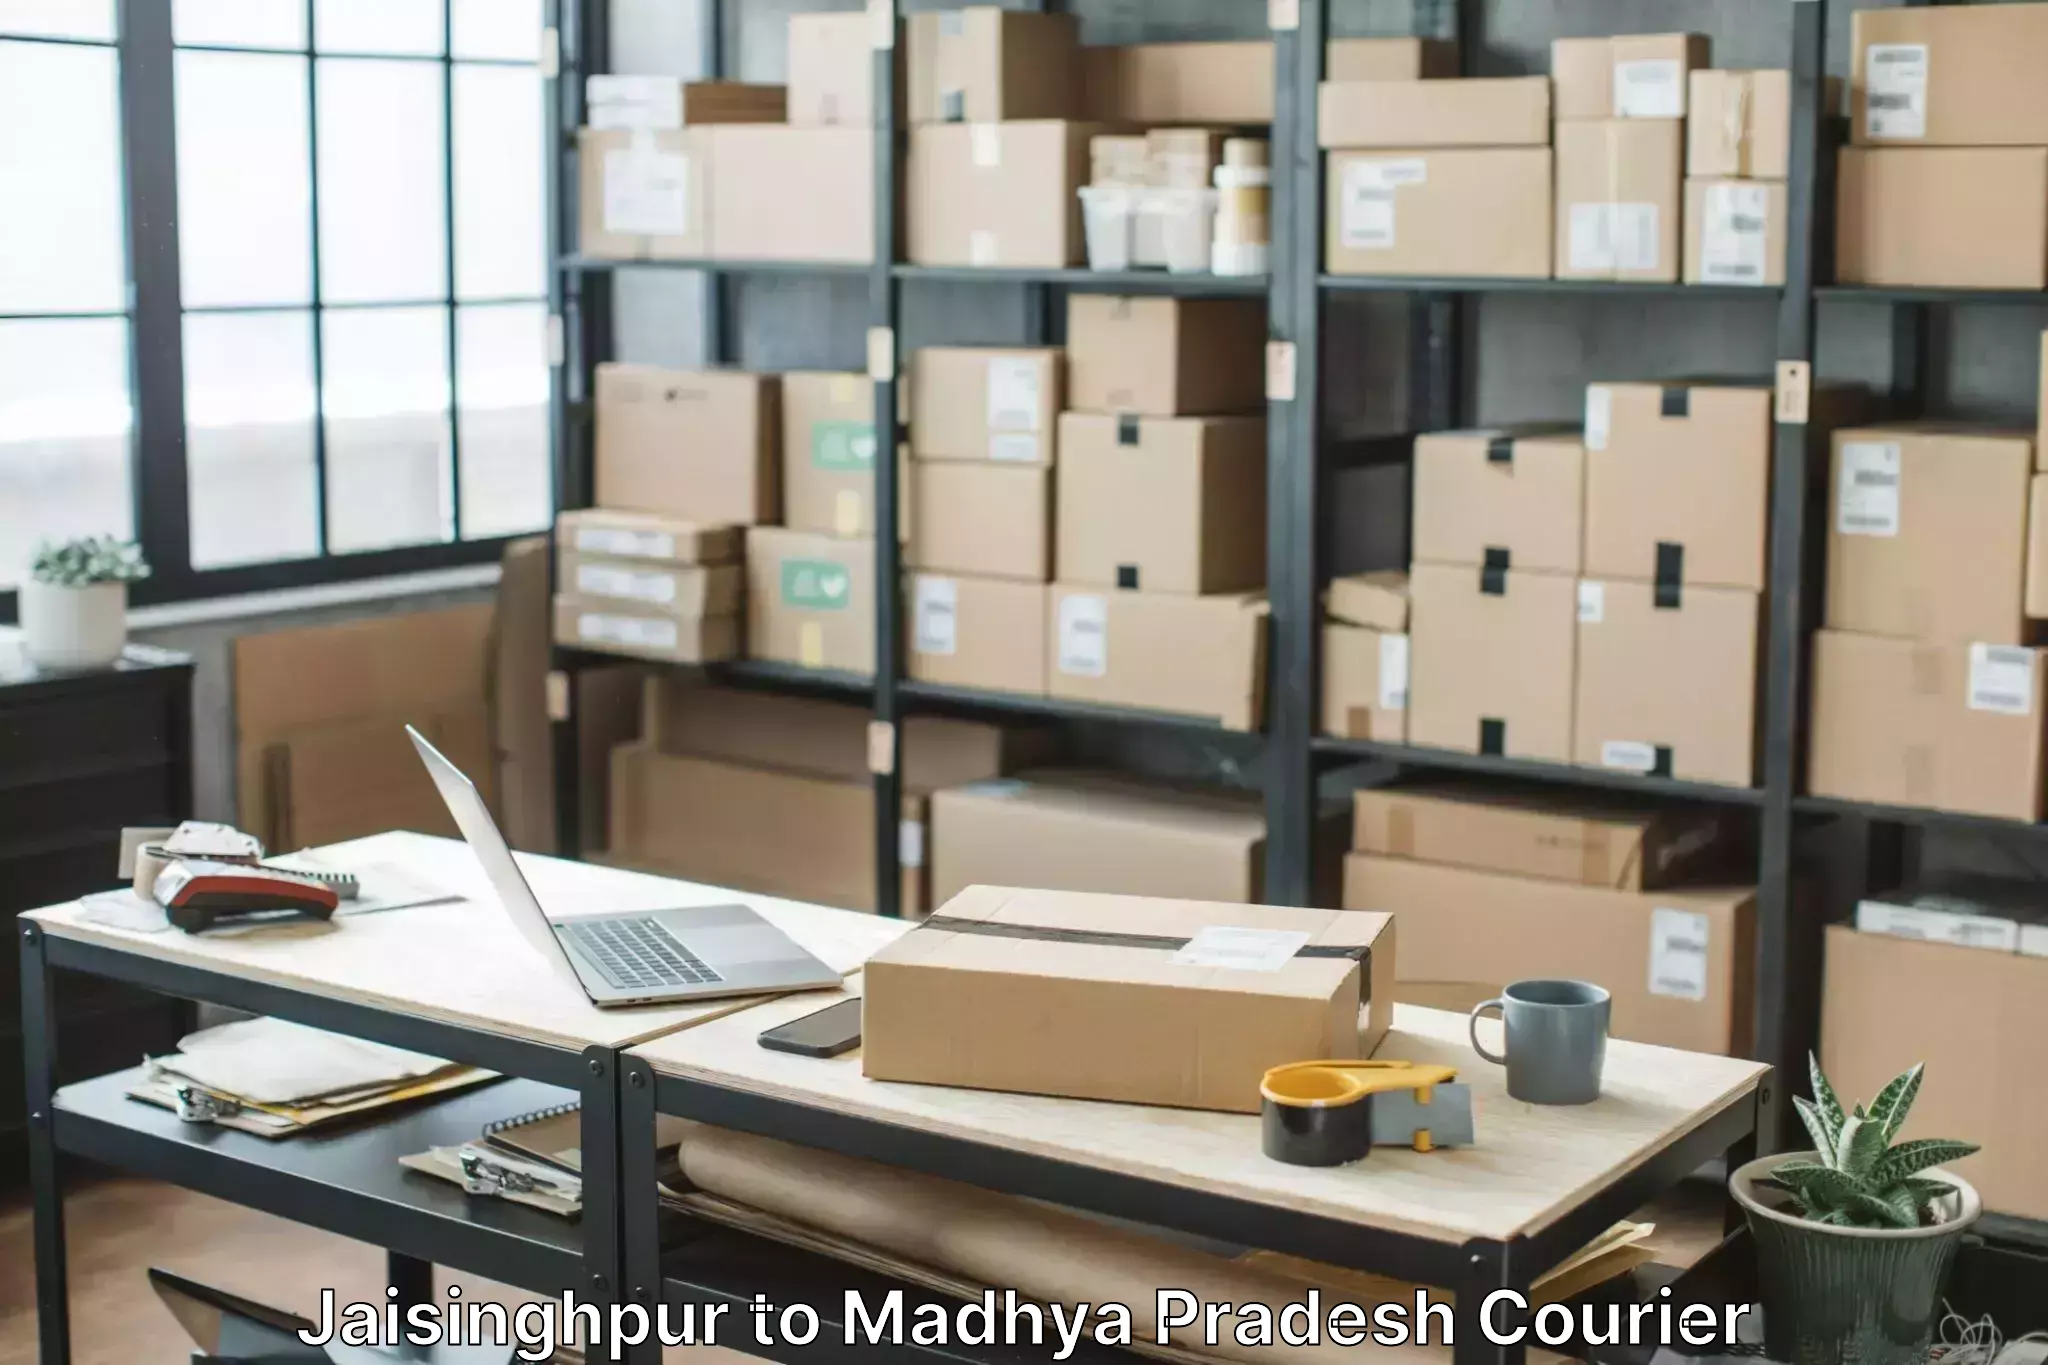 Furniture delivery service Jaisinghpur to Rehli